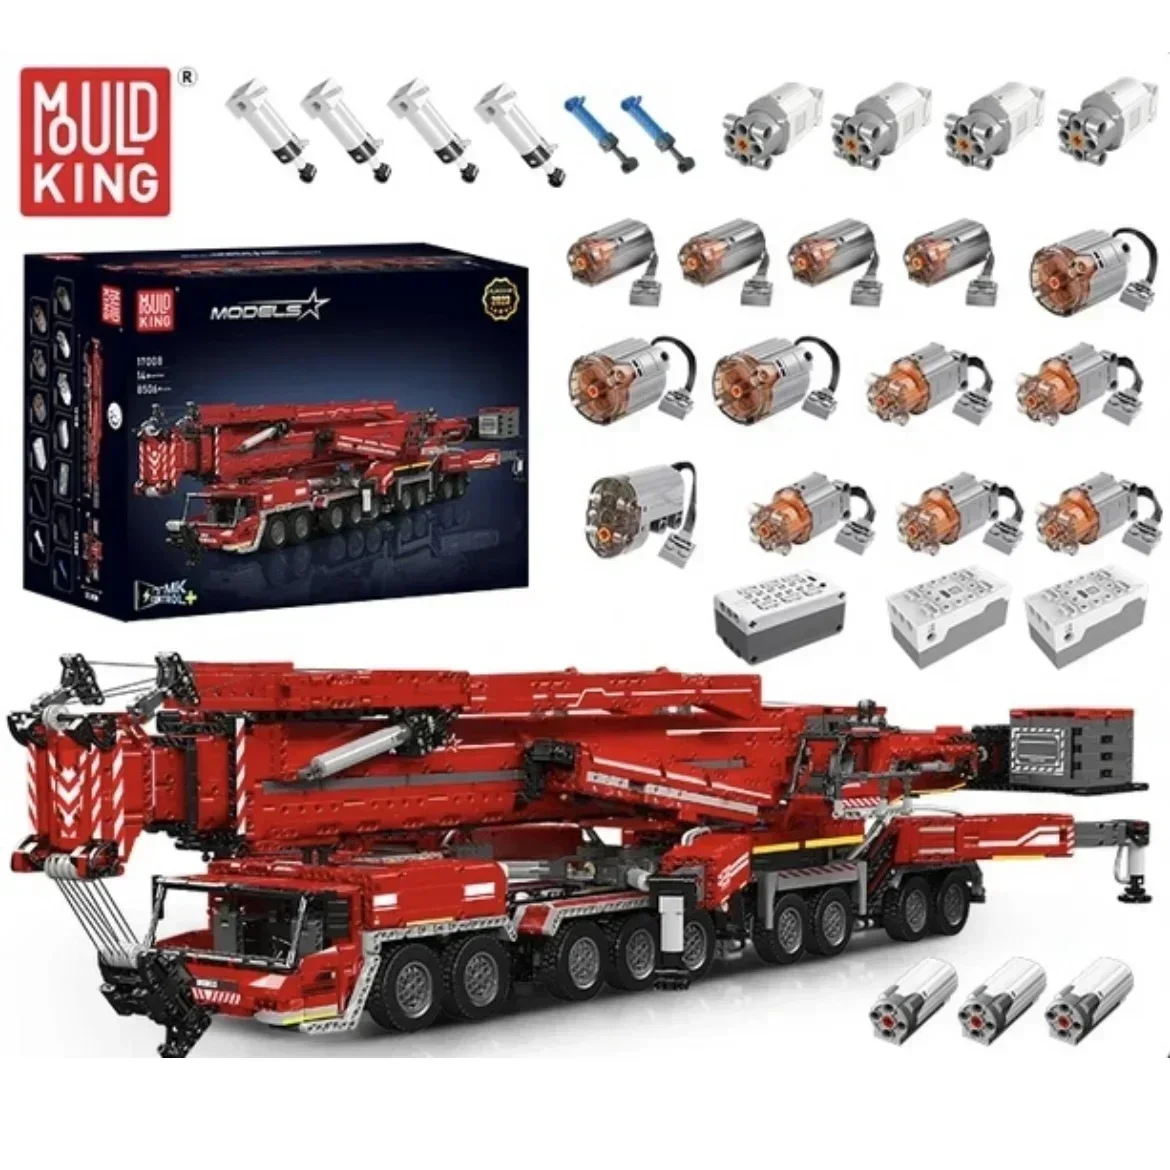 

Mould King 17007/17008 Technical Car Toys Motorized LTM 11200 Crane Truck Building Block Assembly Model Brick Kid Christmas Gift